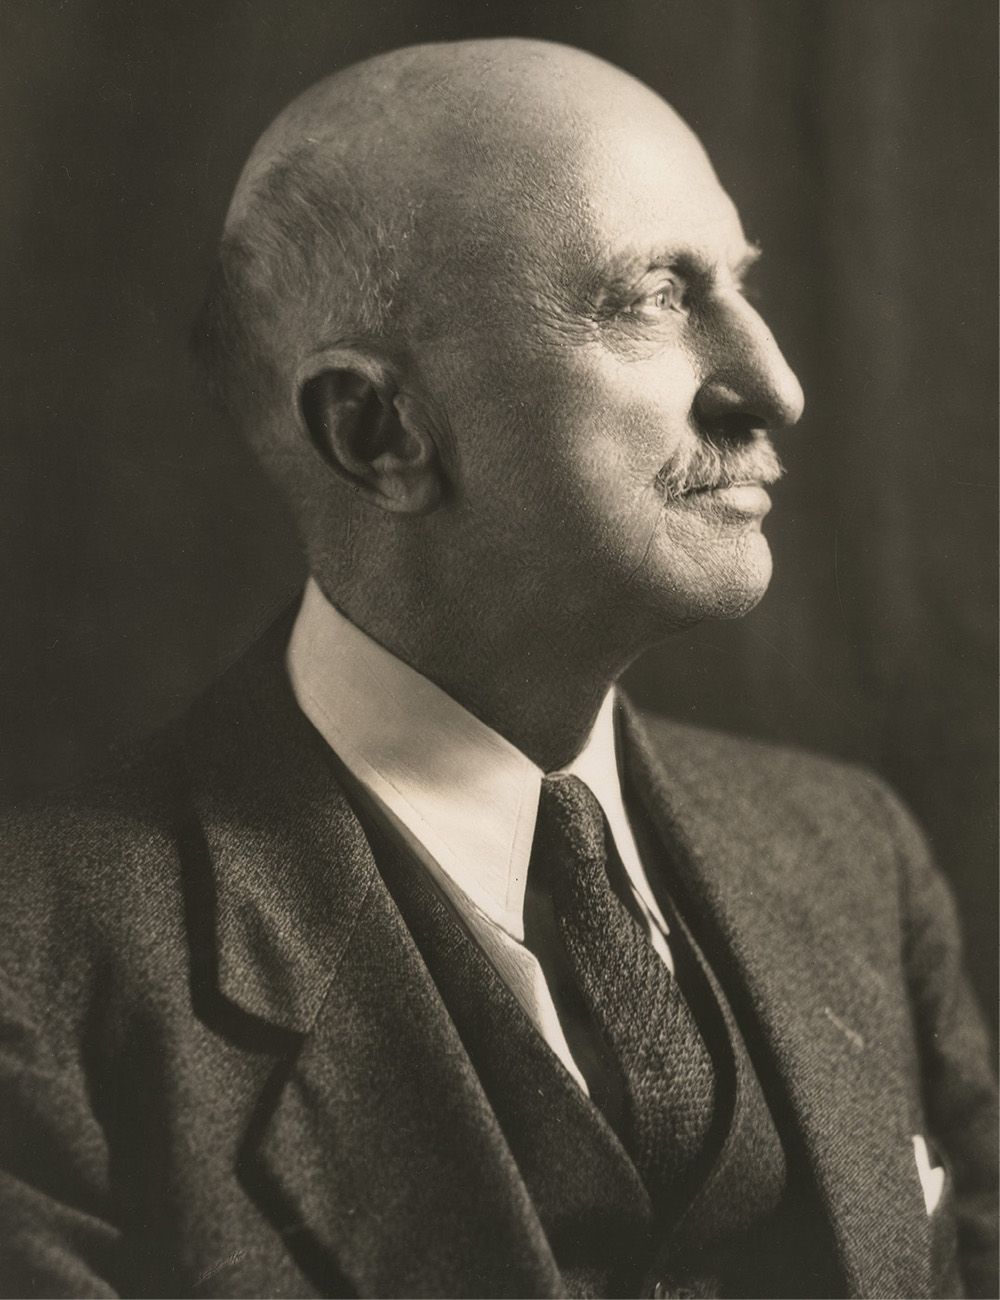 James H. Kirkland